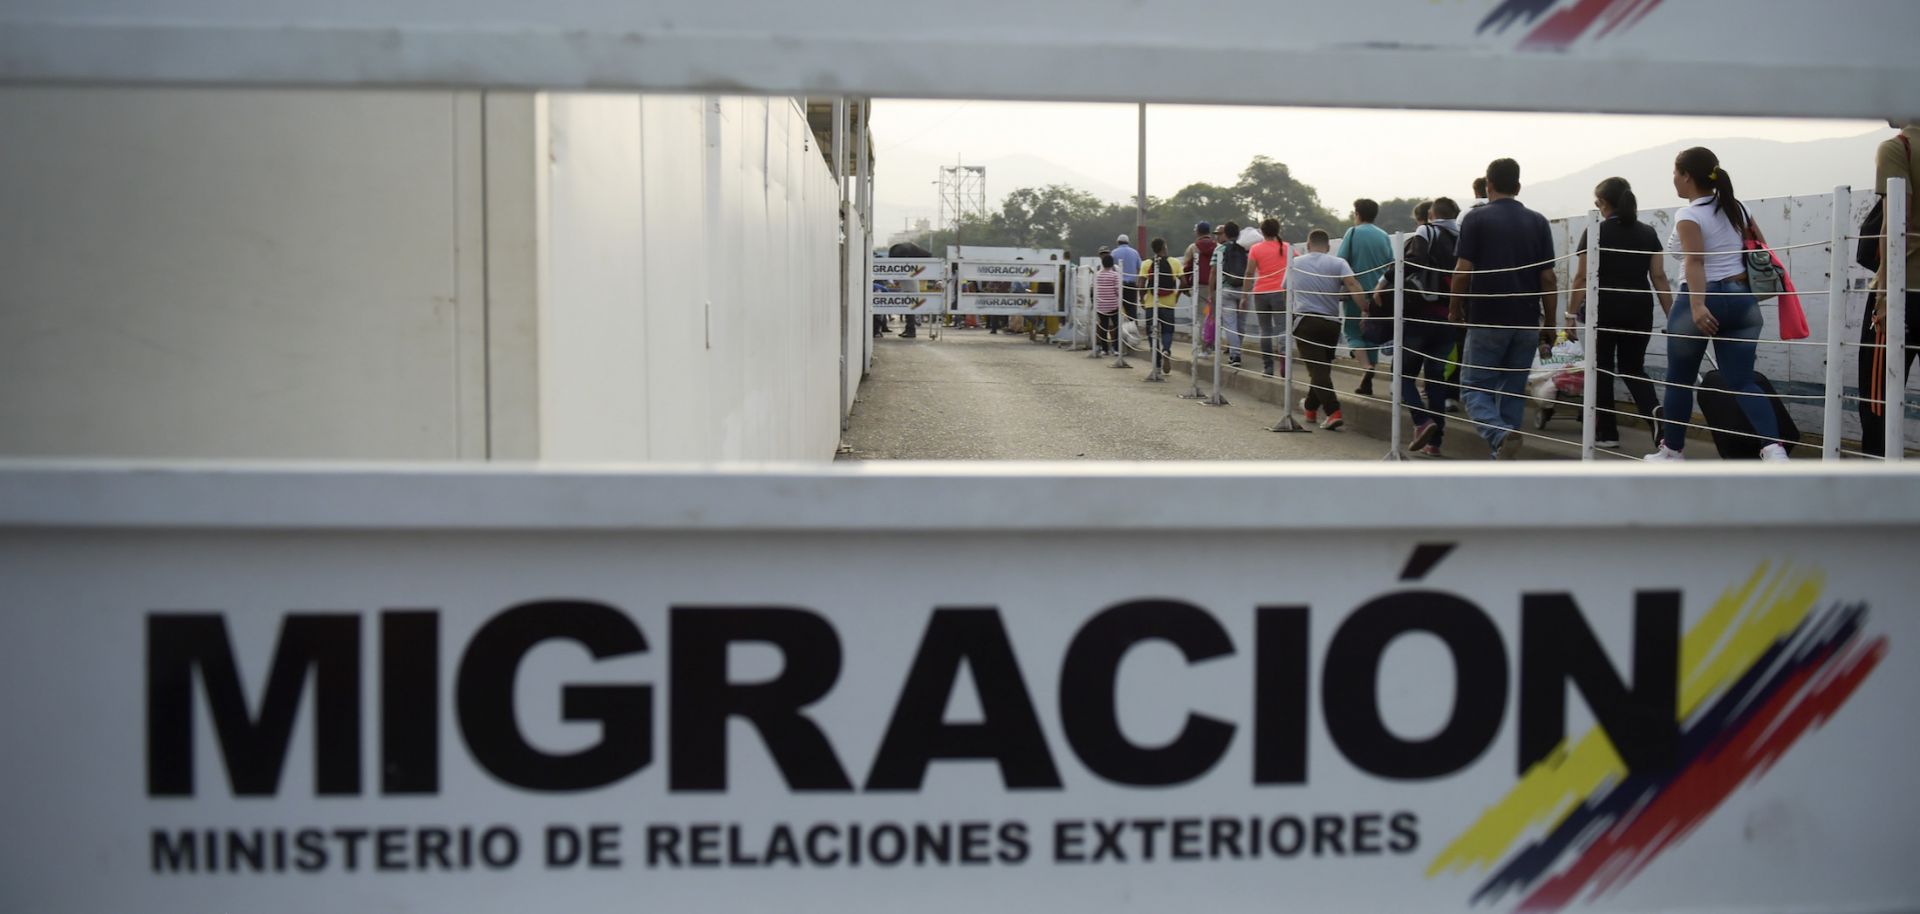 People queue at the border between Colombia and Venezuela